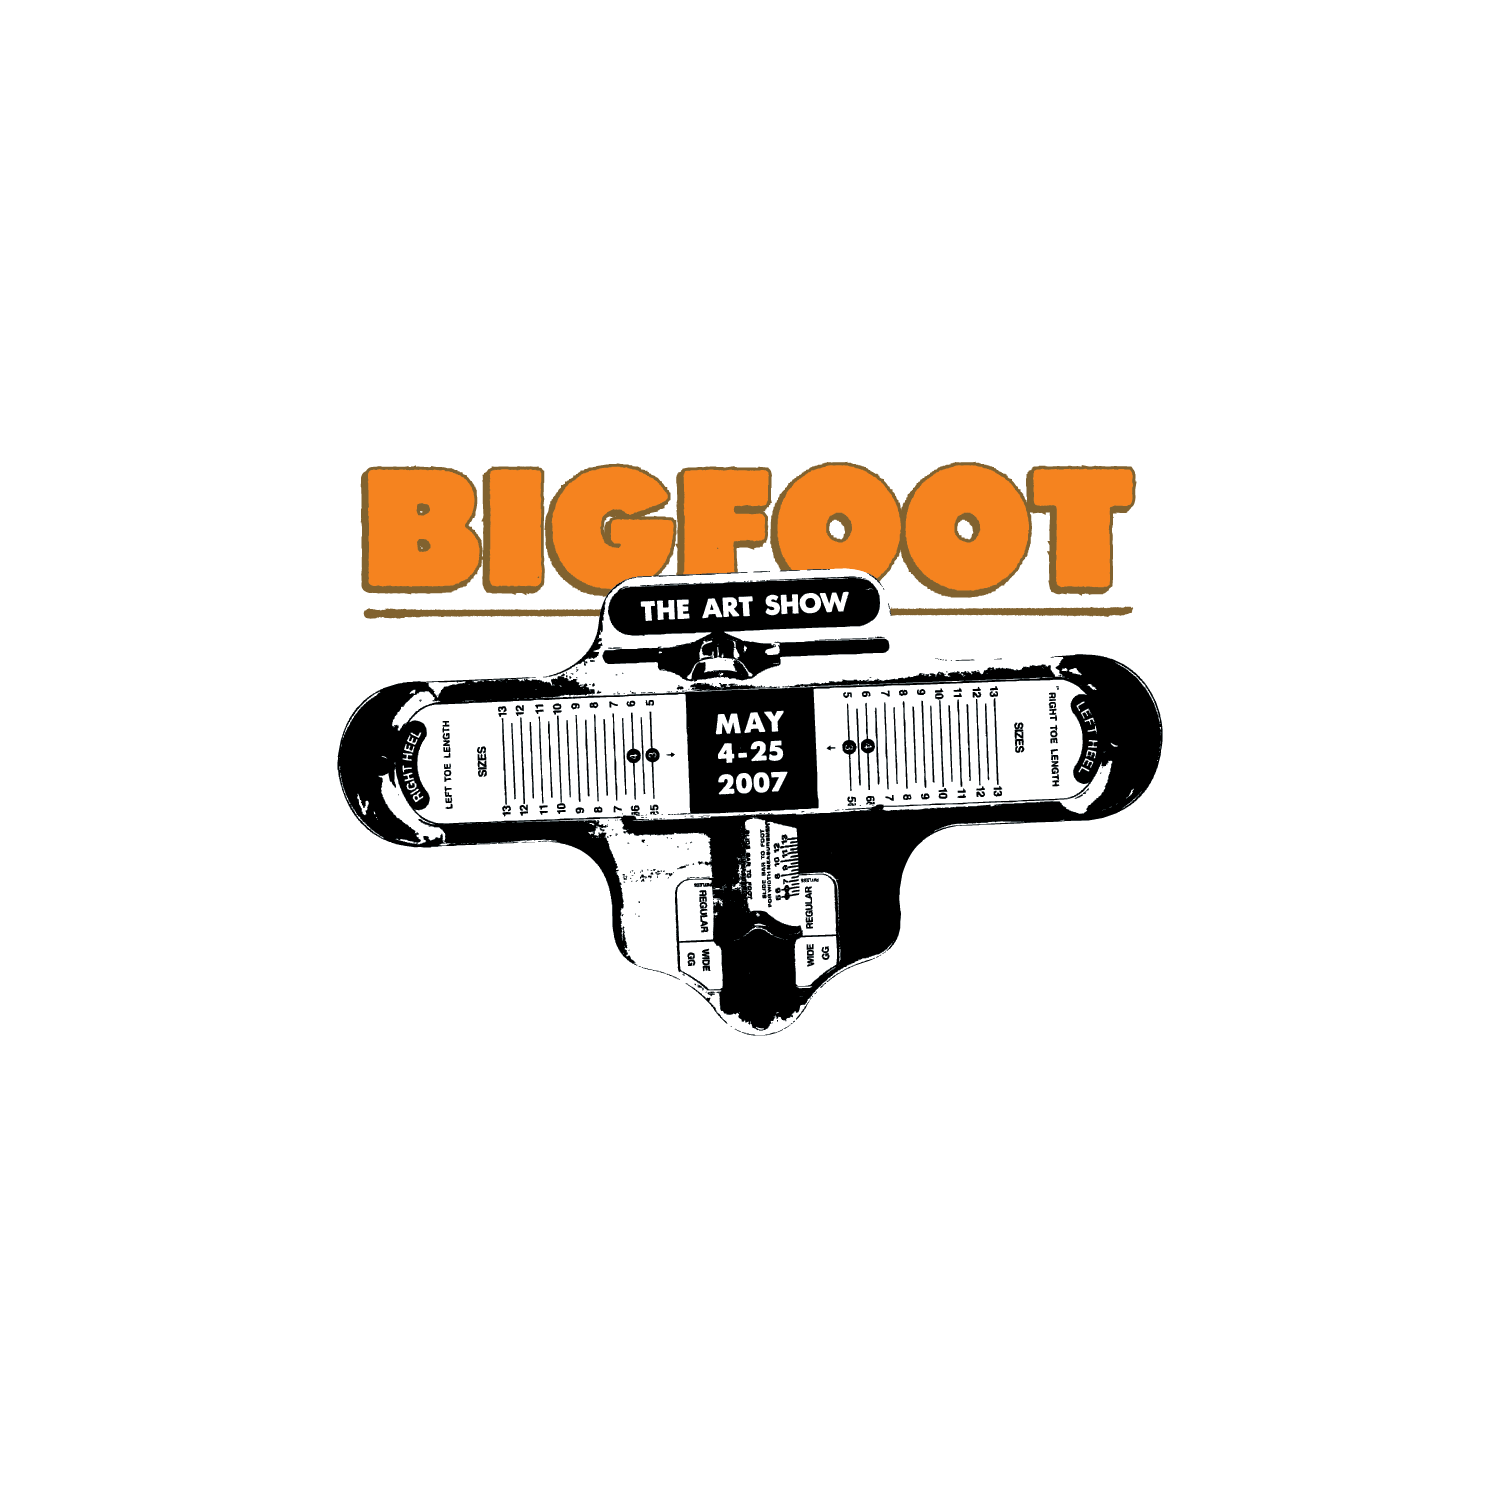 Bigfoot the Art Show logo by OLSON MCINTYRE